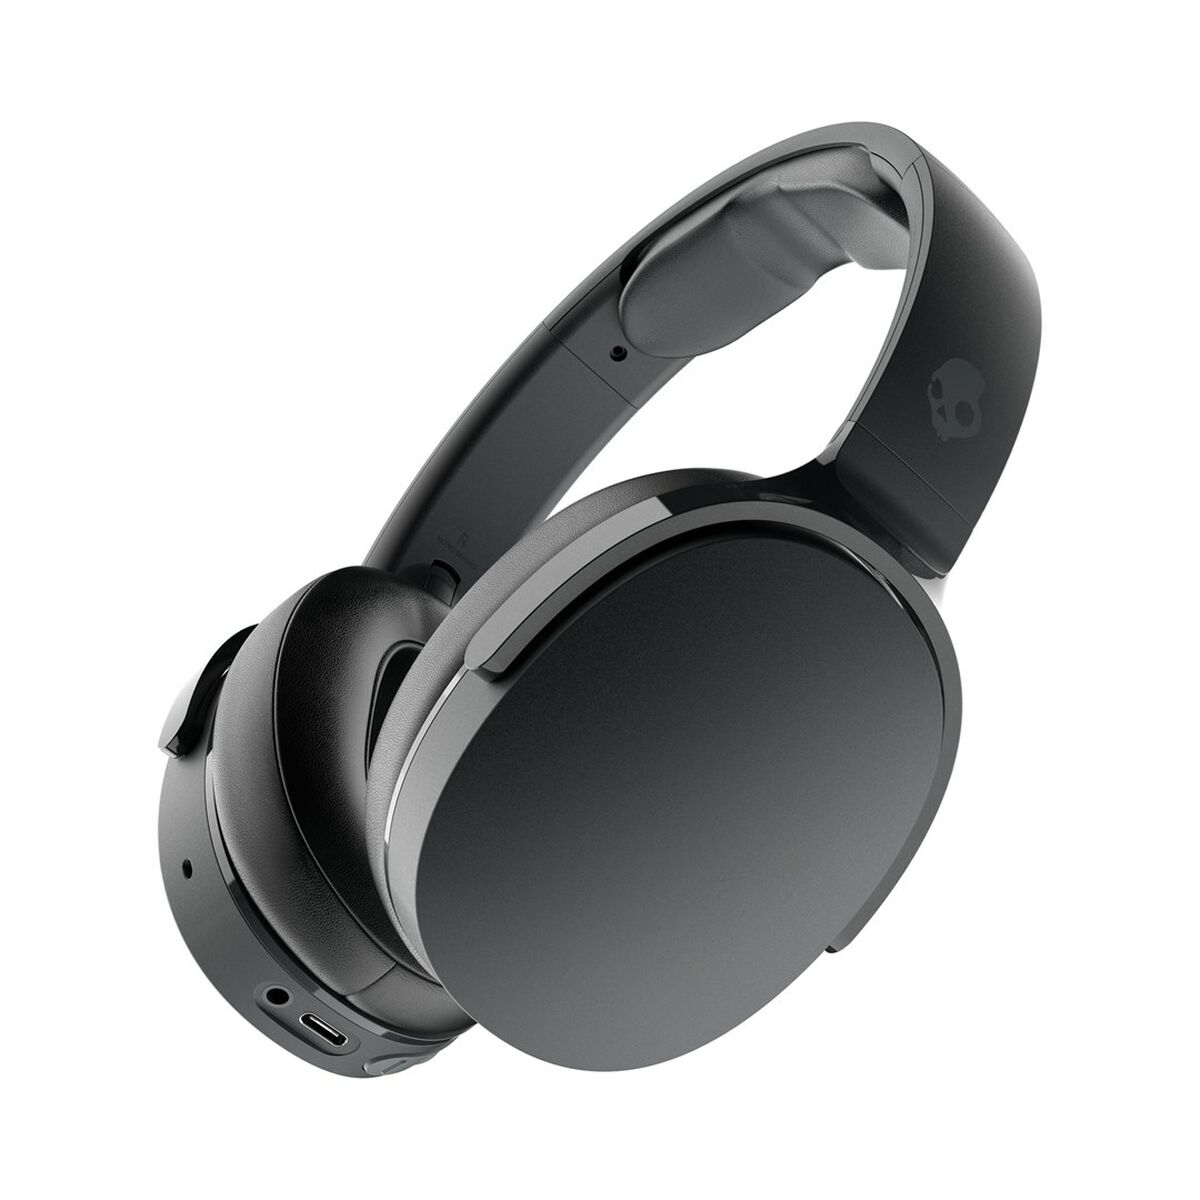 Auriculares Bluetooth Skullcandy S6hvw-n740 - negro - 